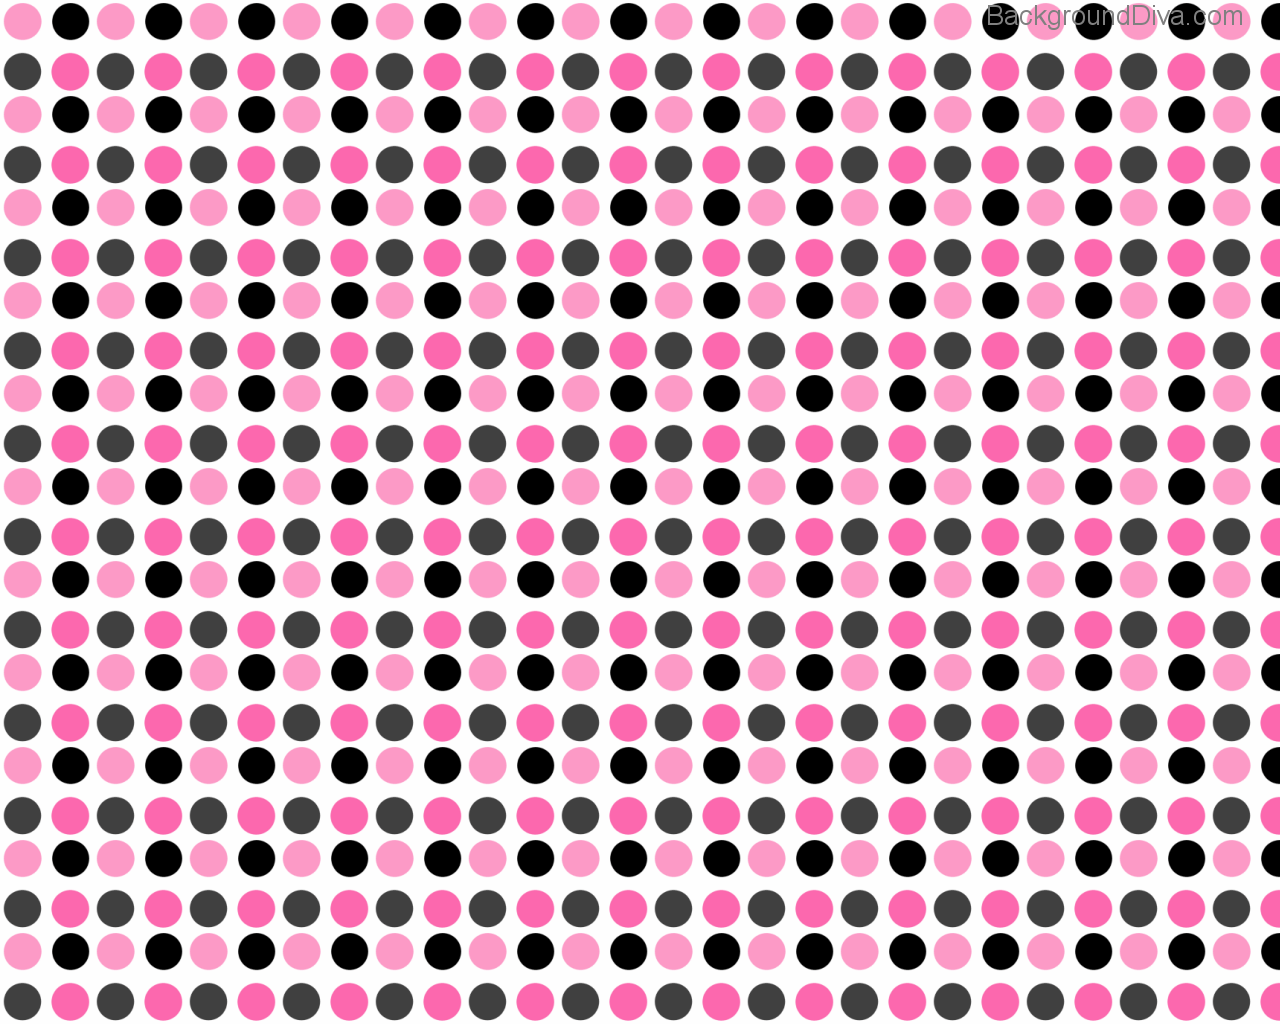 Cute Polka Dots Wallpaper , Find HD Wallpaper For Free